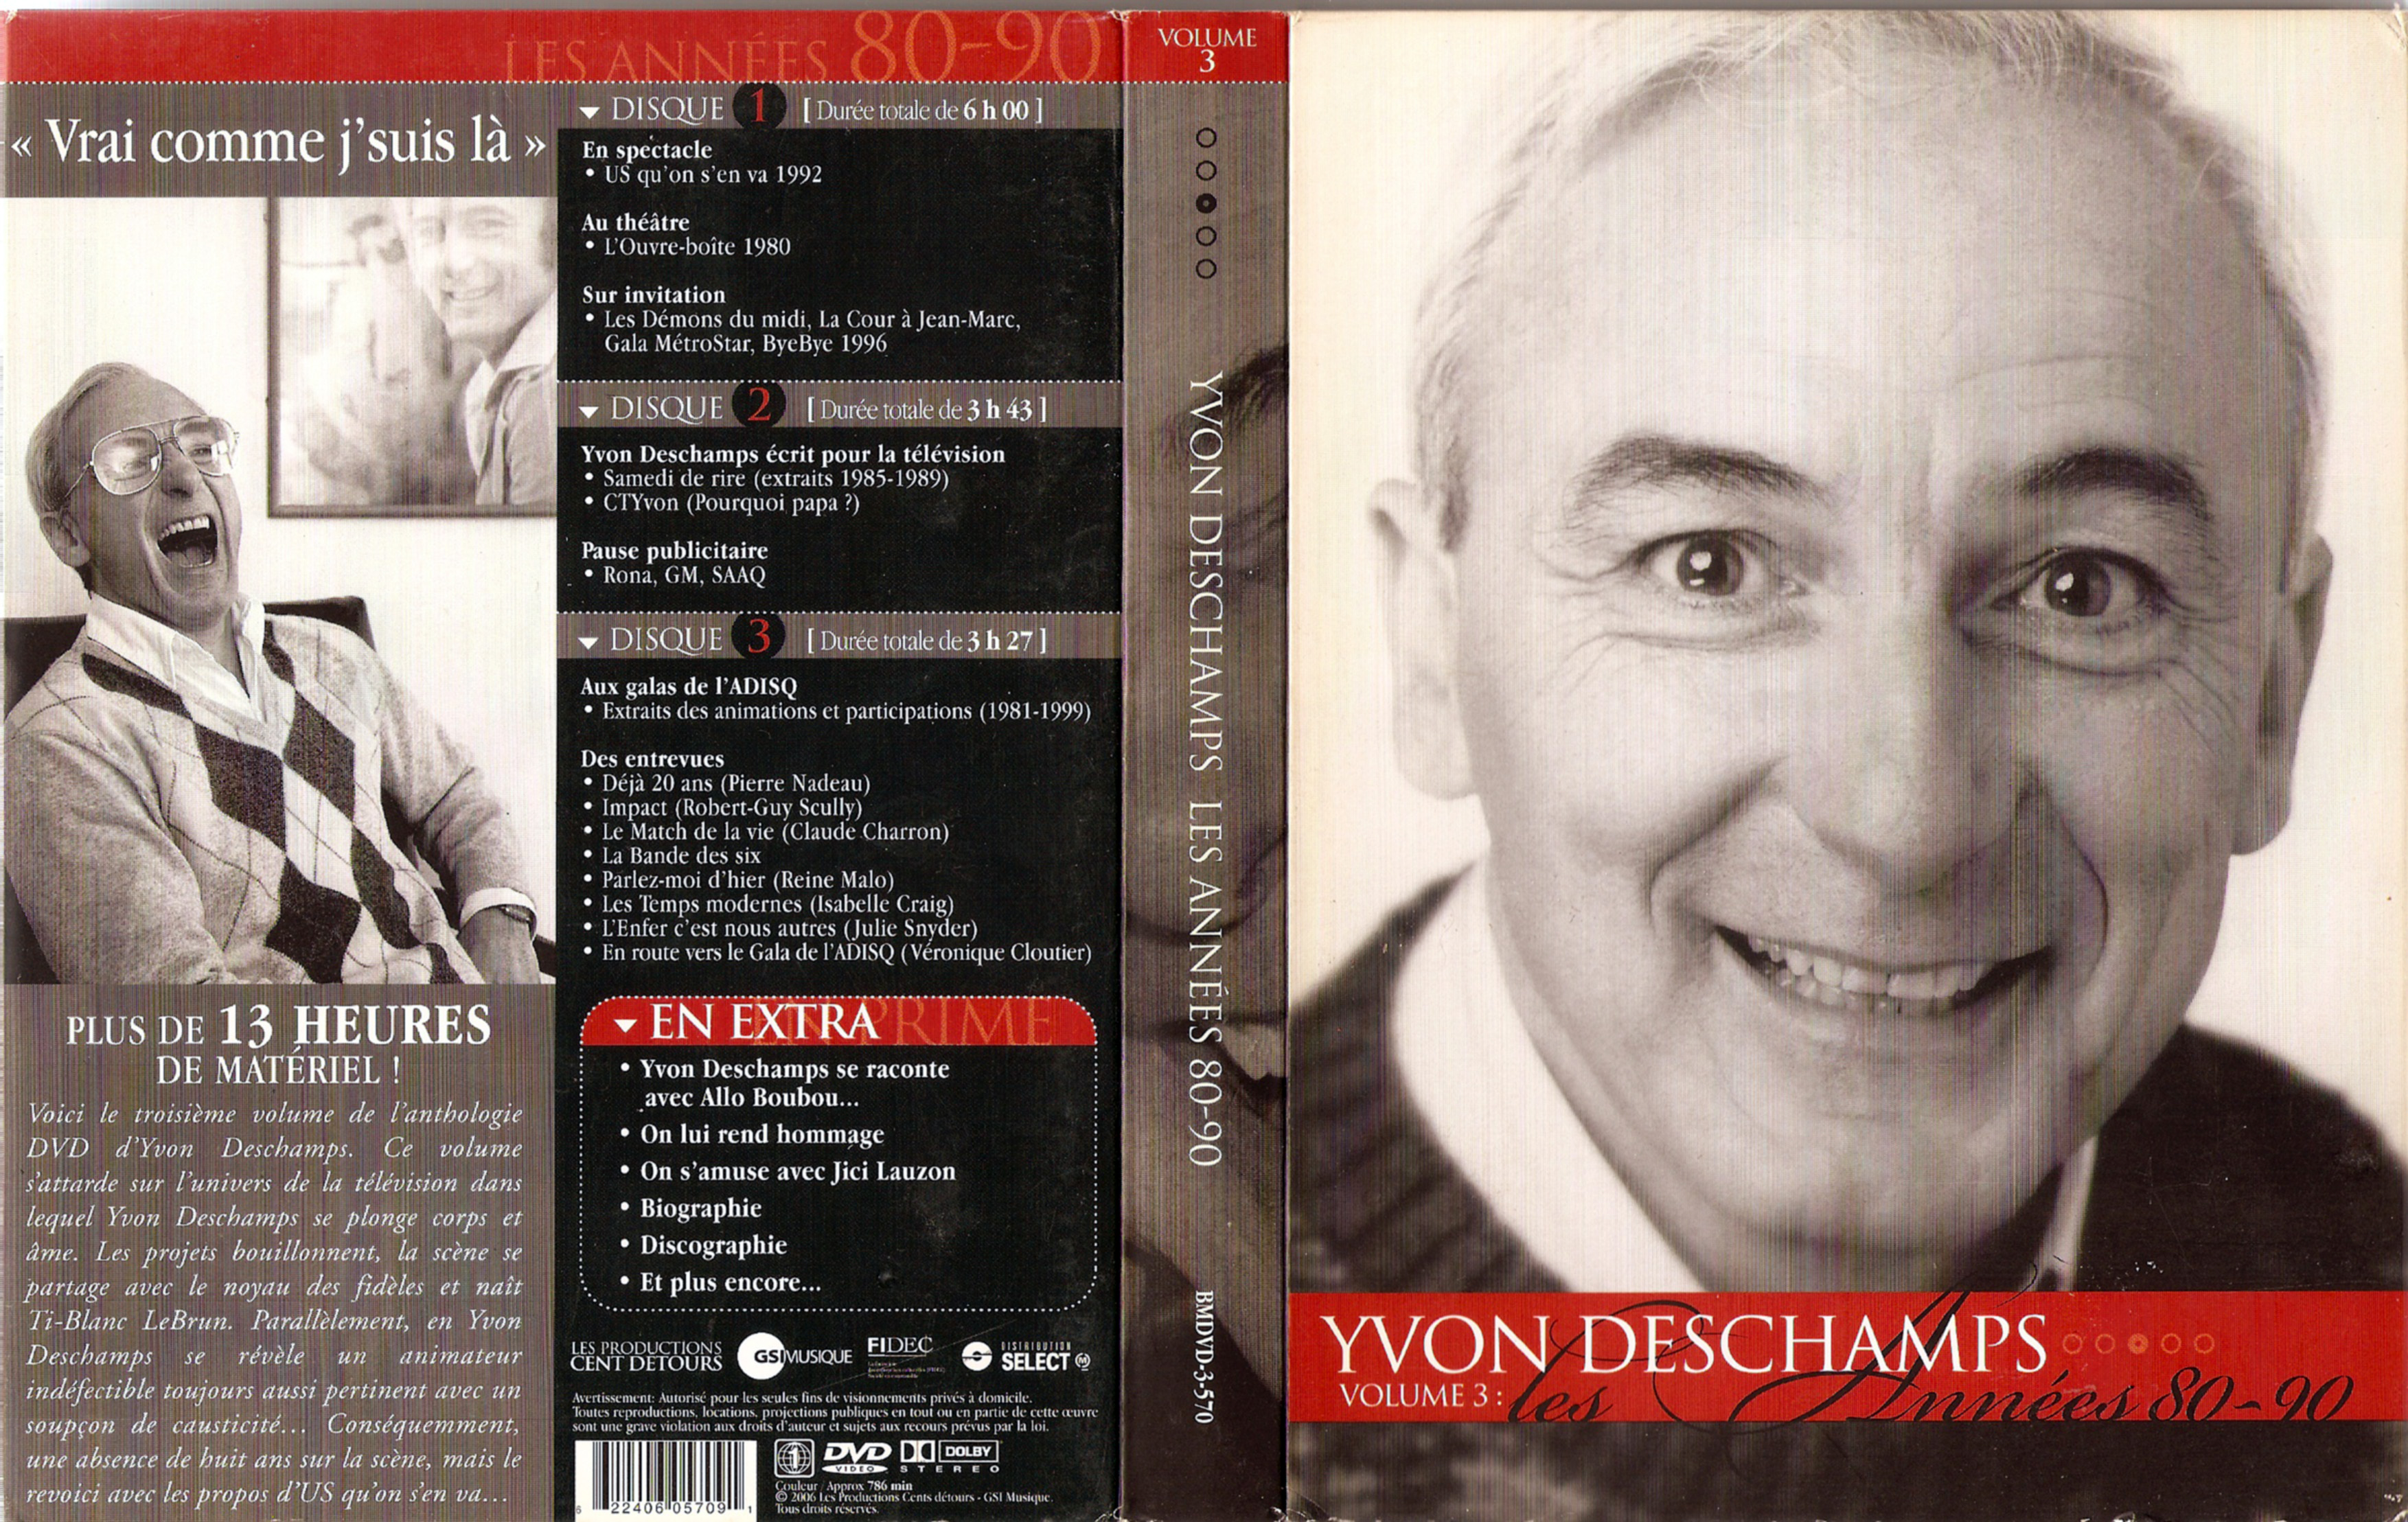 Jaquette DVD Yvon Deschamps vol 3